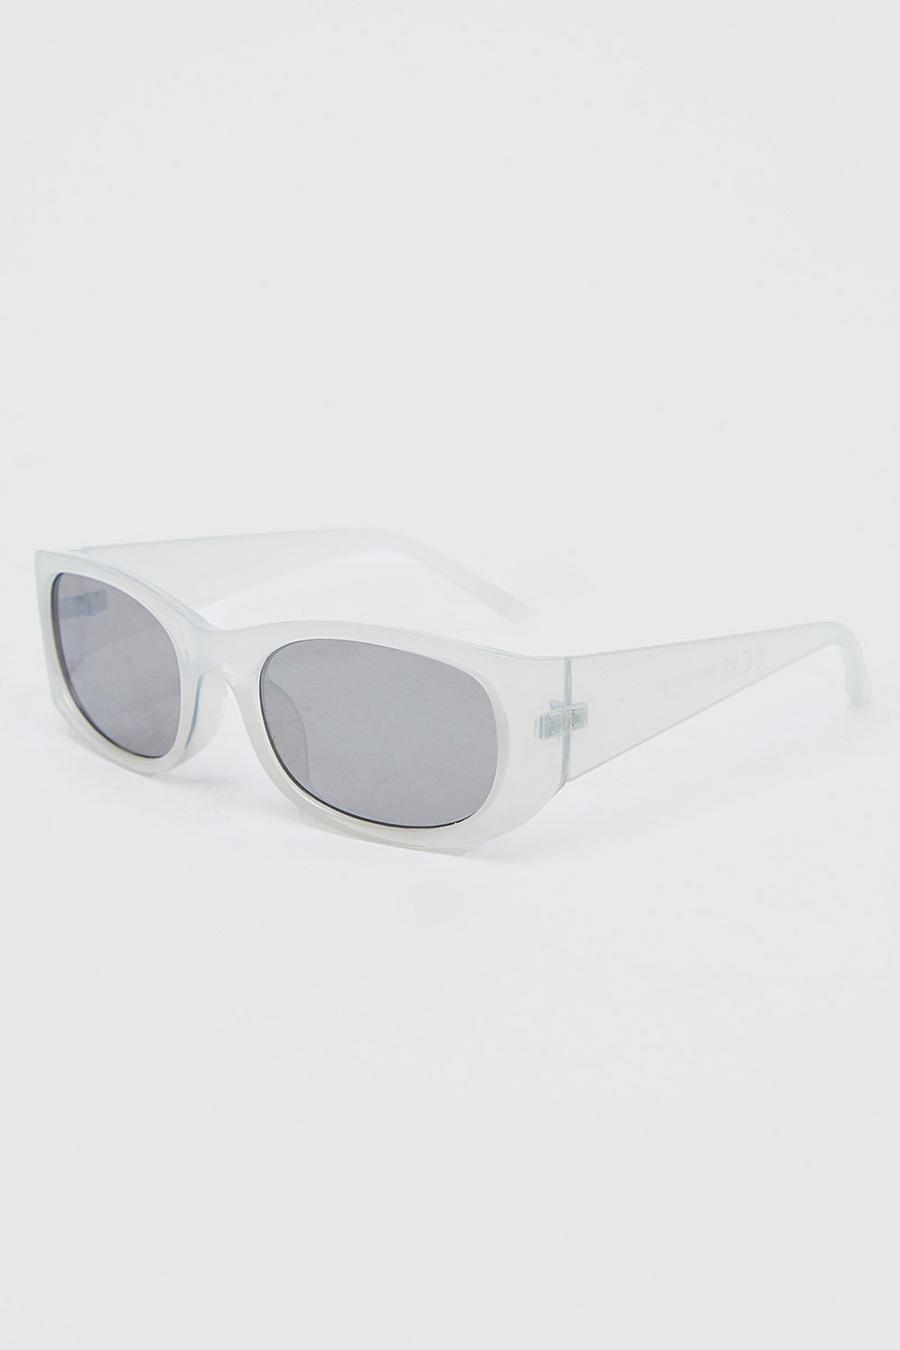 White משקפי שמש מלבניים בעיצוב מעטפת מפלסטיק ממוחזר